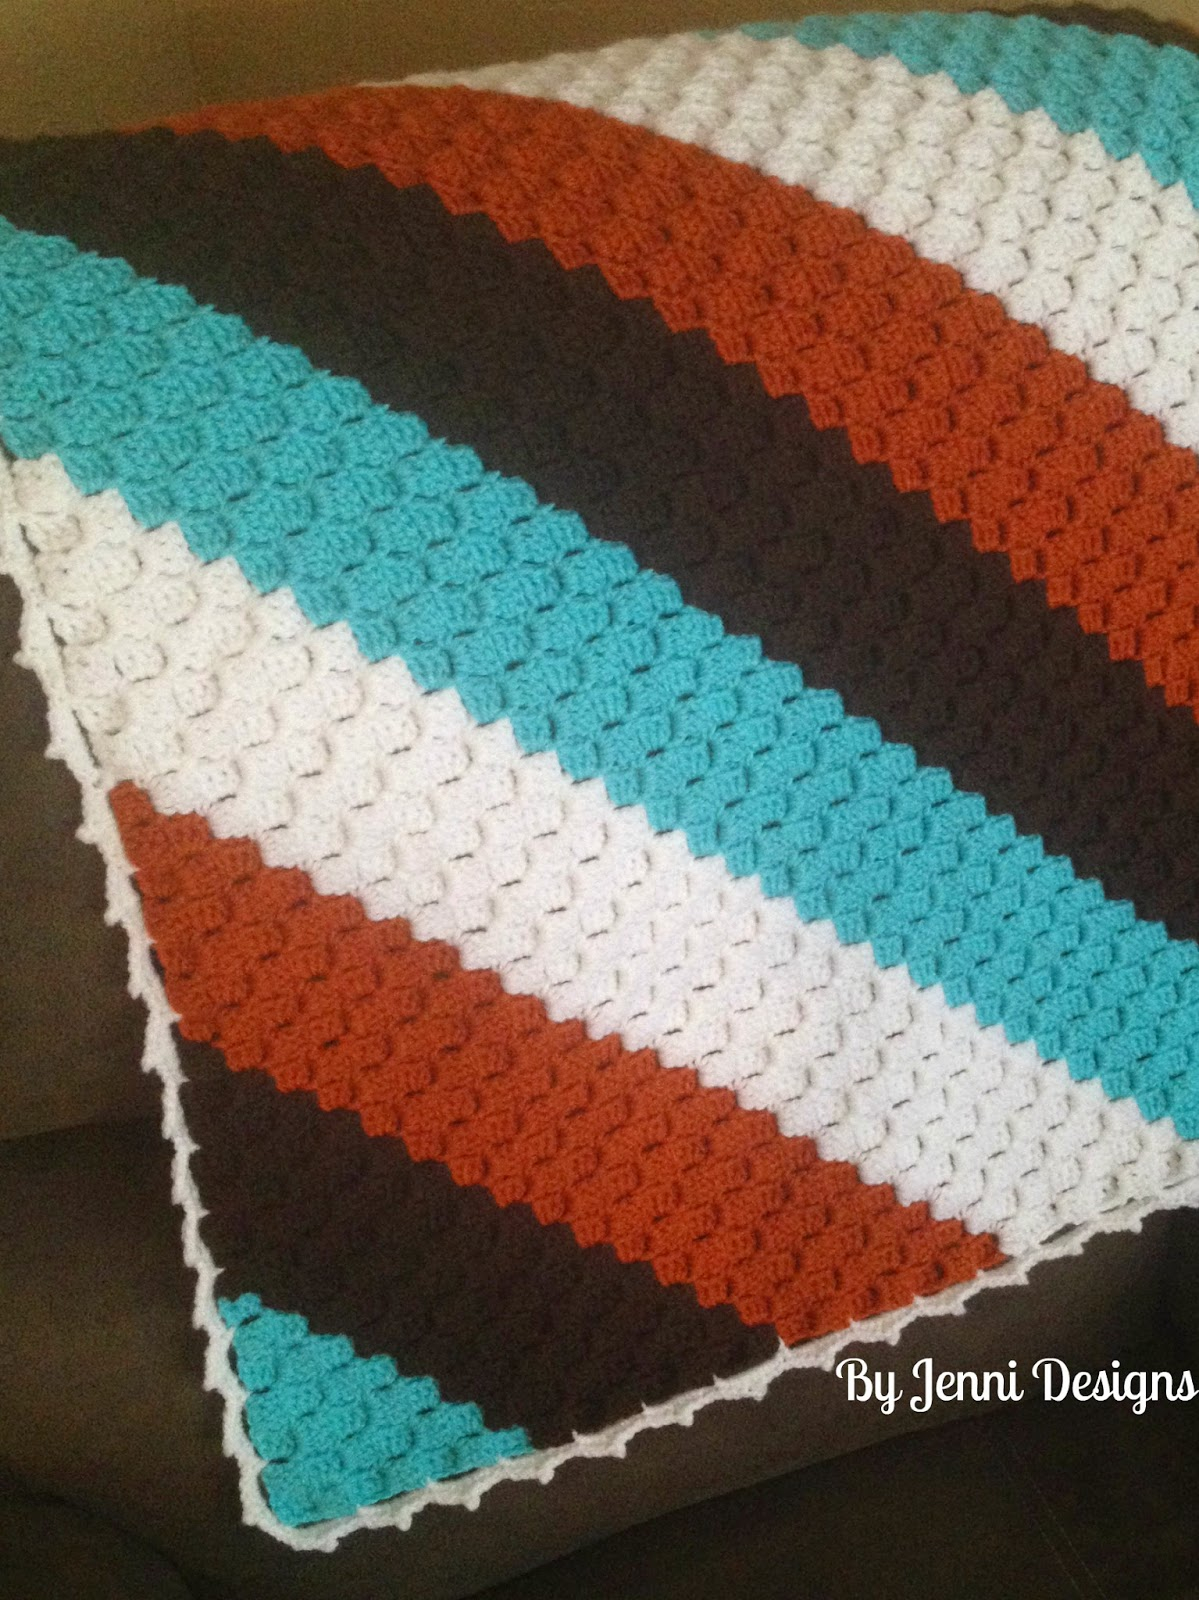 Crochet Corner To Corner Blanket Pattern Jenni Designs Free Crochet Pattern Simple Picot Corner To